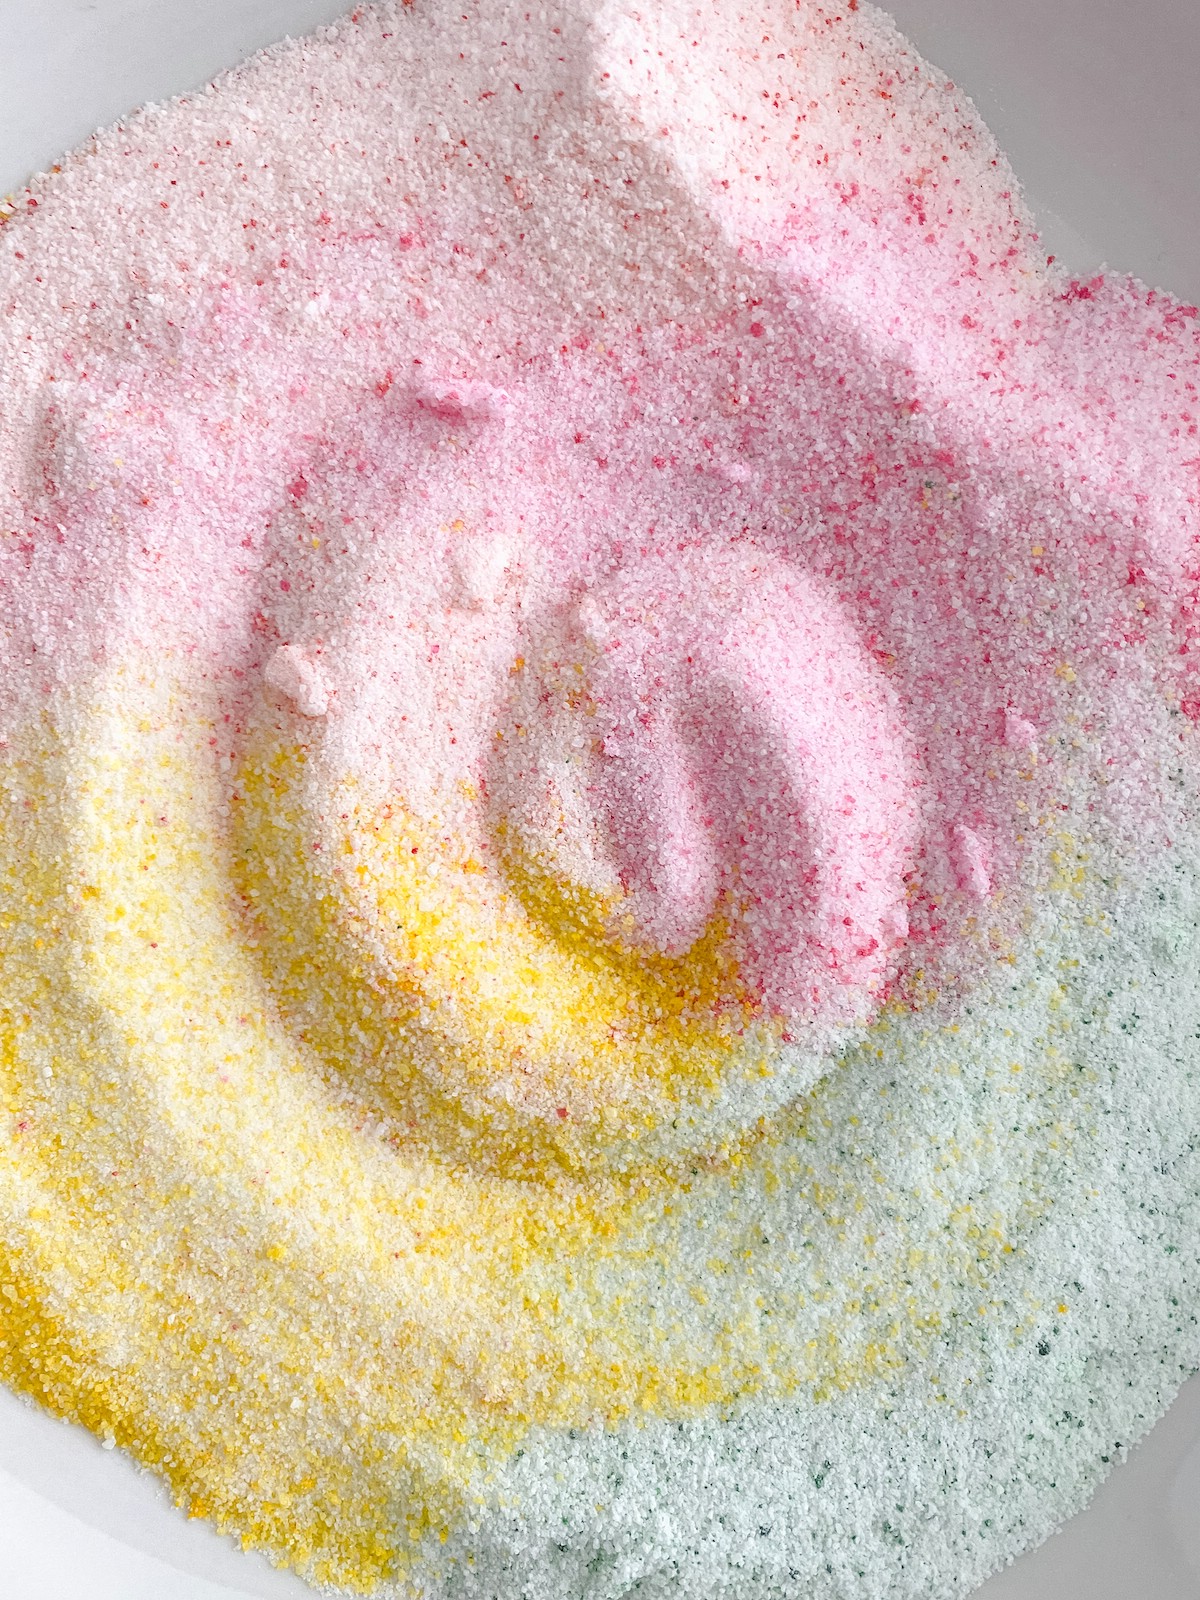 Colored sugar swirled together 